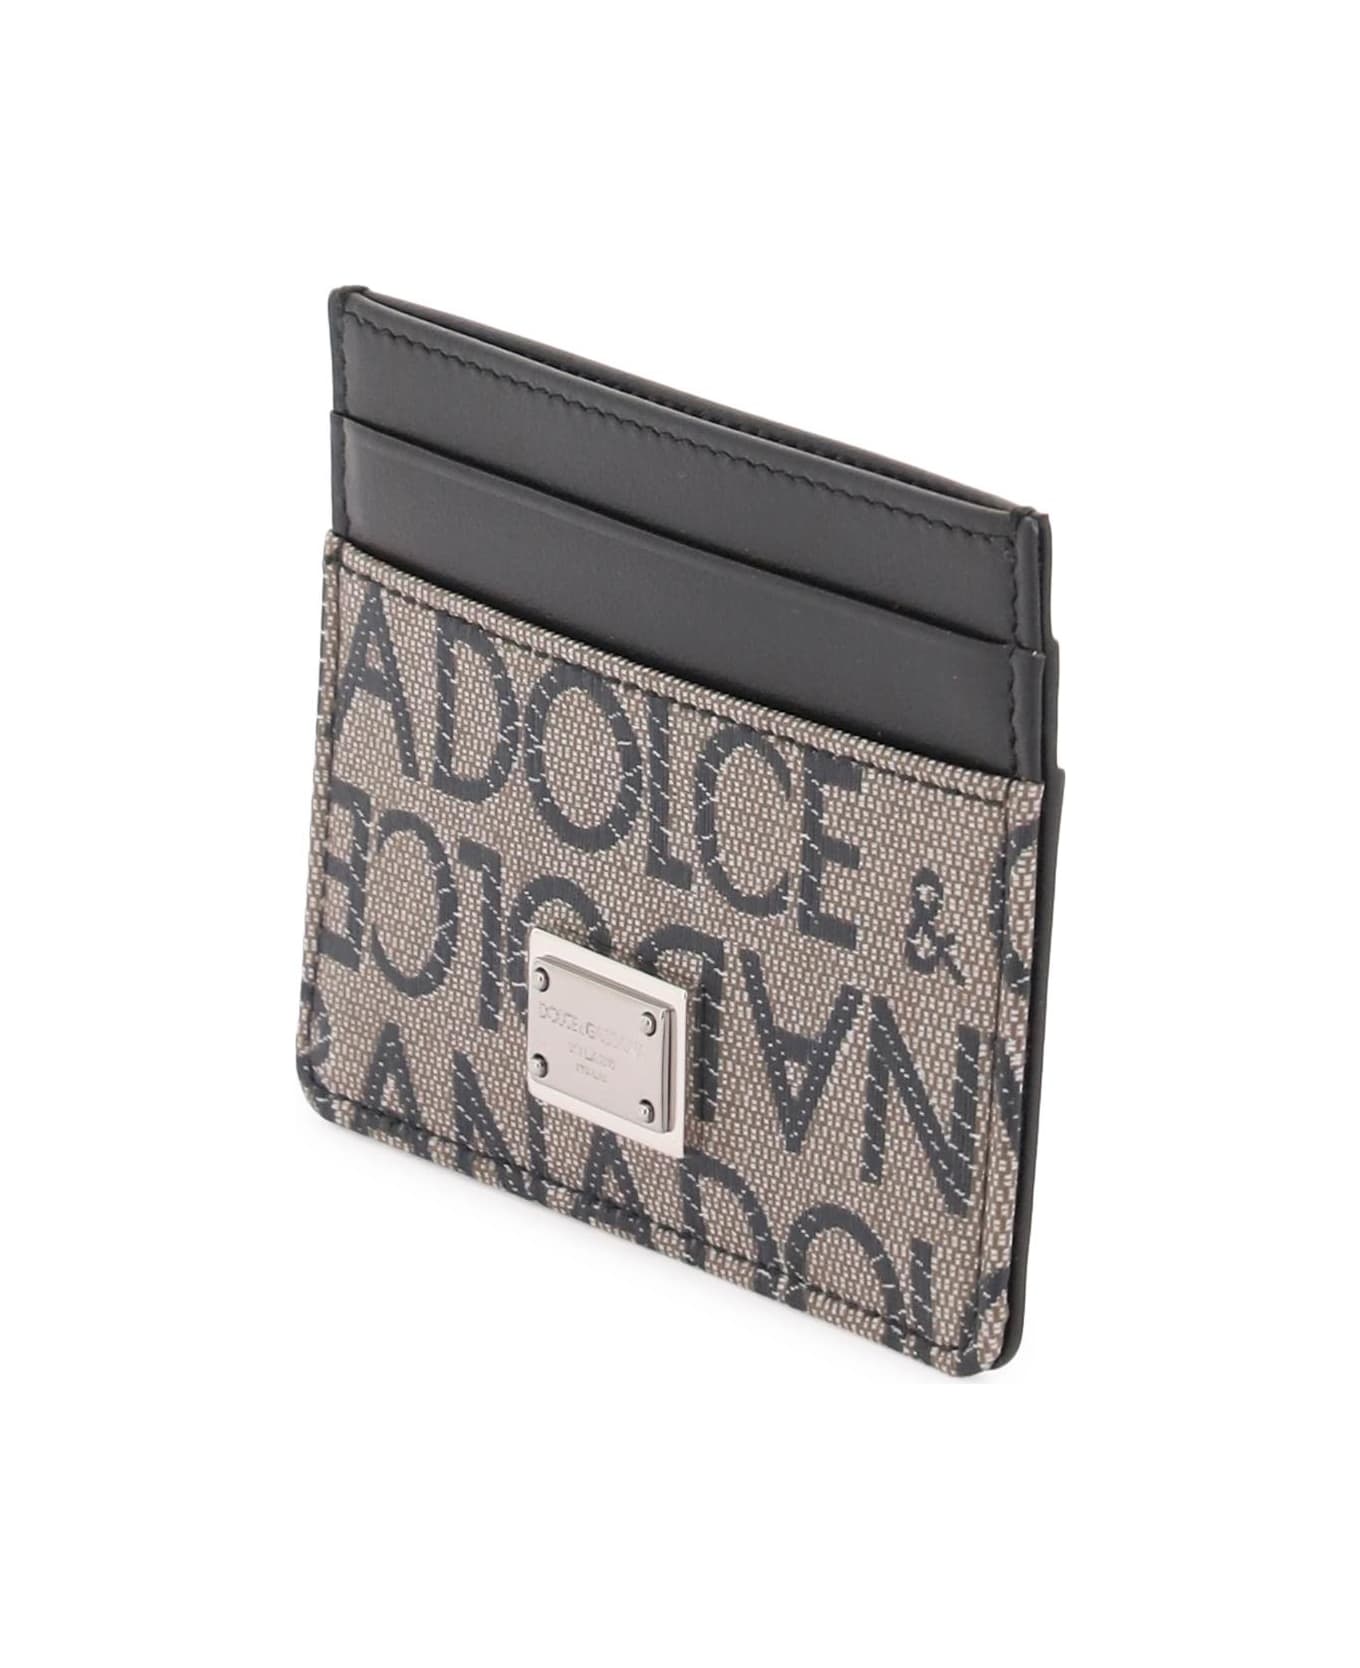 Dolce & Gabbana Leather Card Holder - Marrone/nero 財布